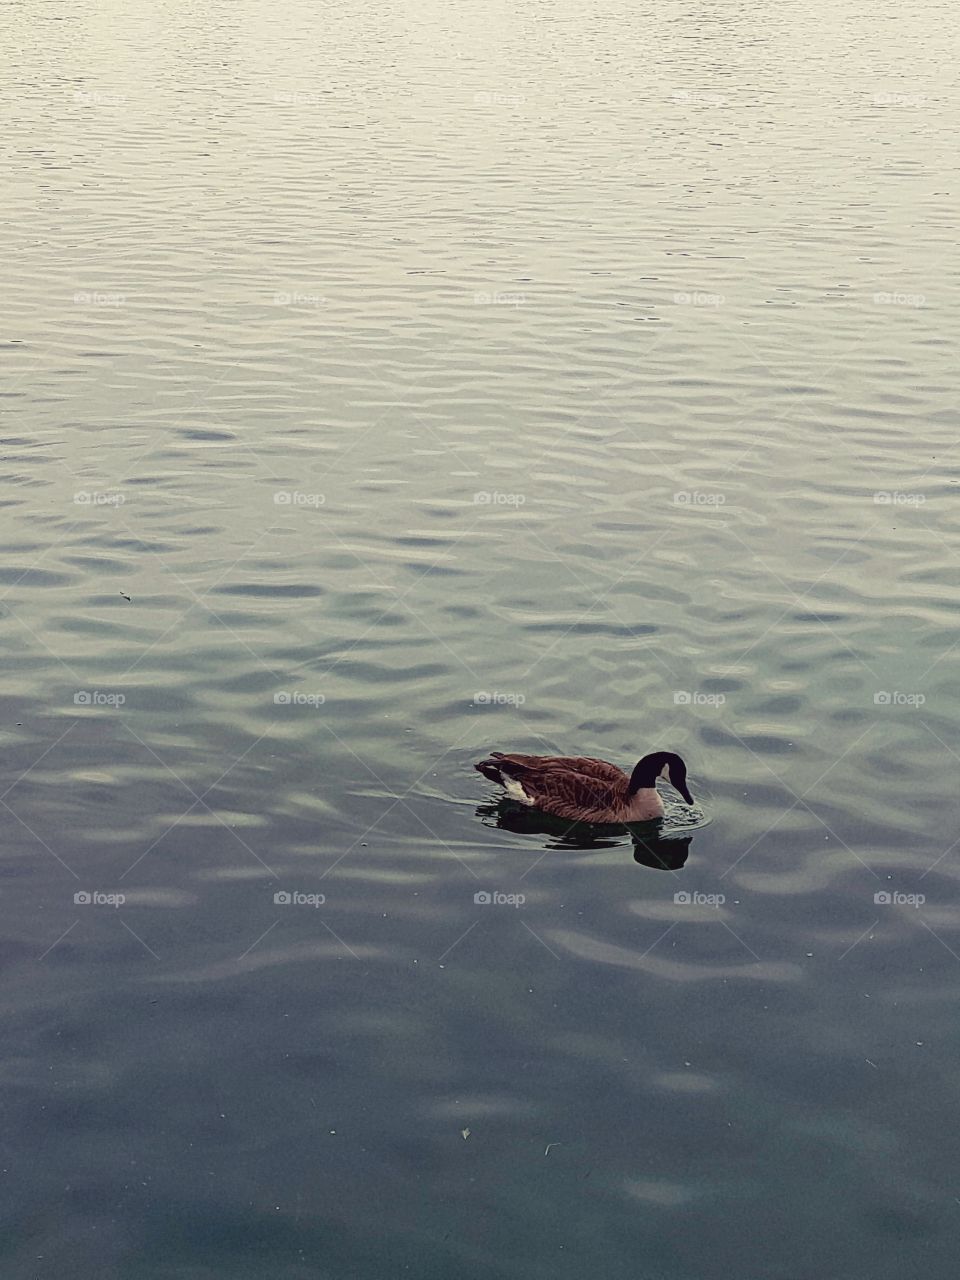 A singular Canadian goose gliding through the serene water.